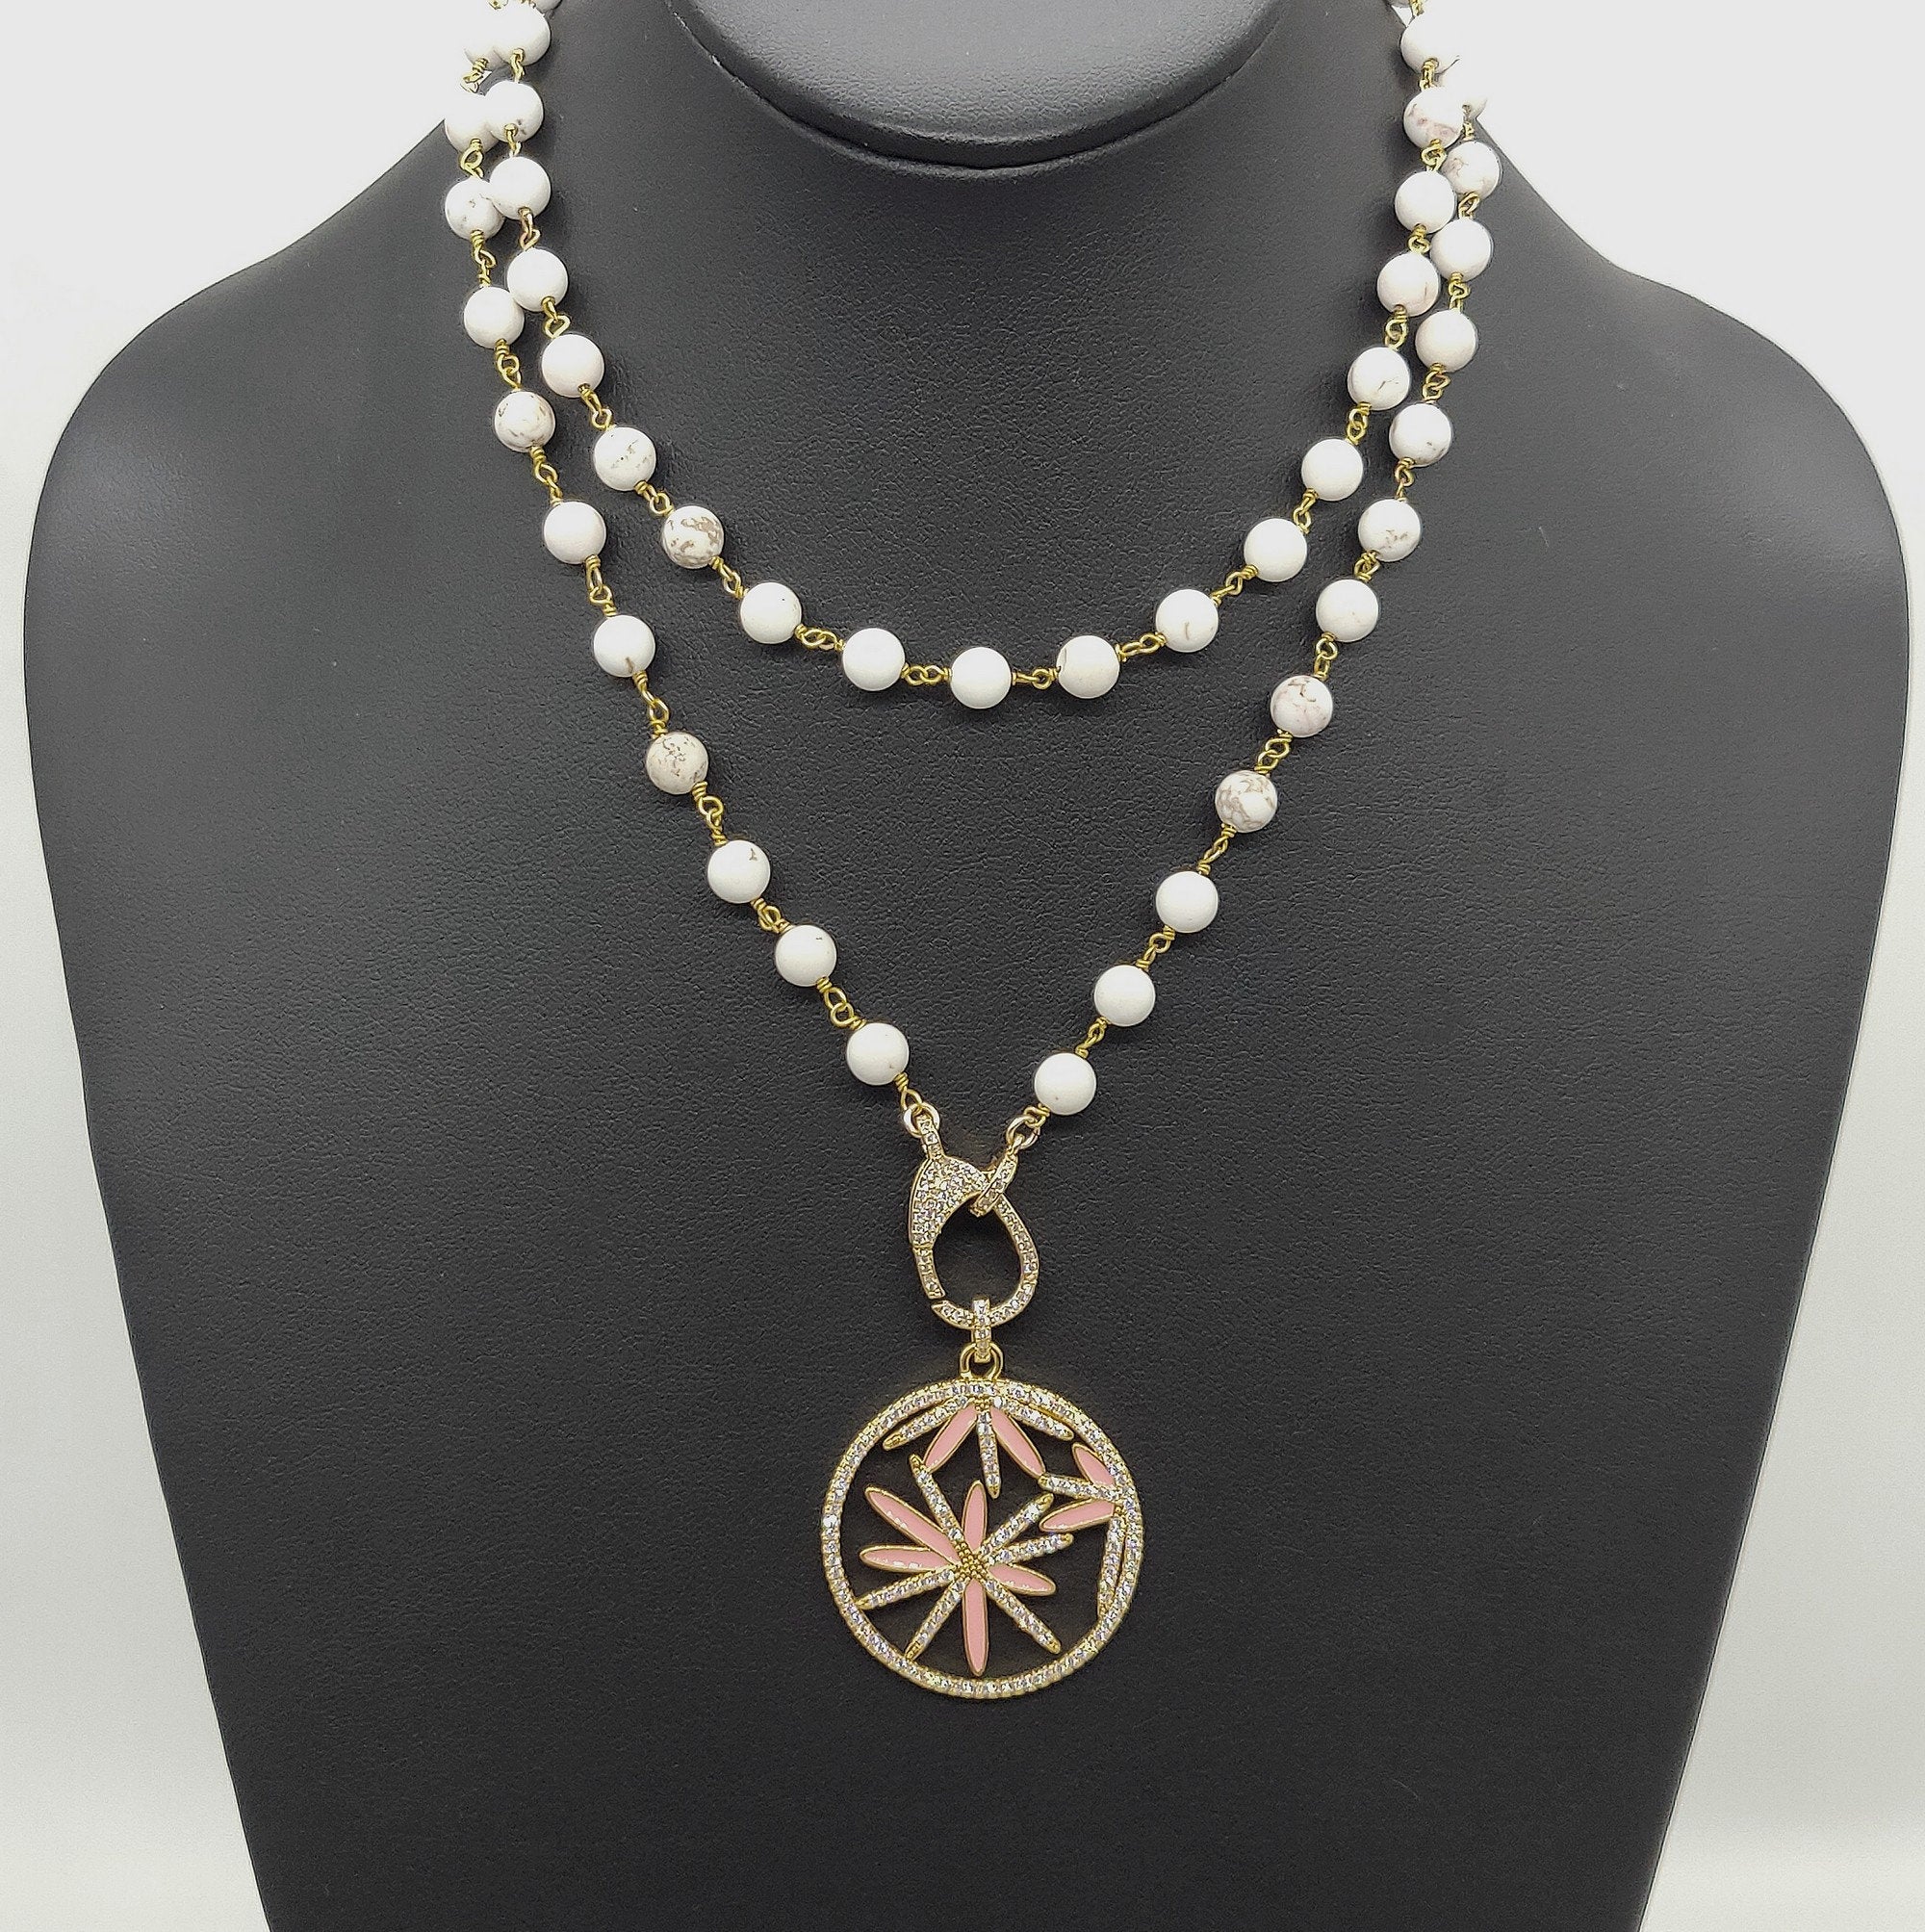 Gold Lotus Flower Necklace - A Girls Gems